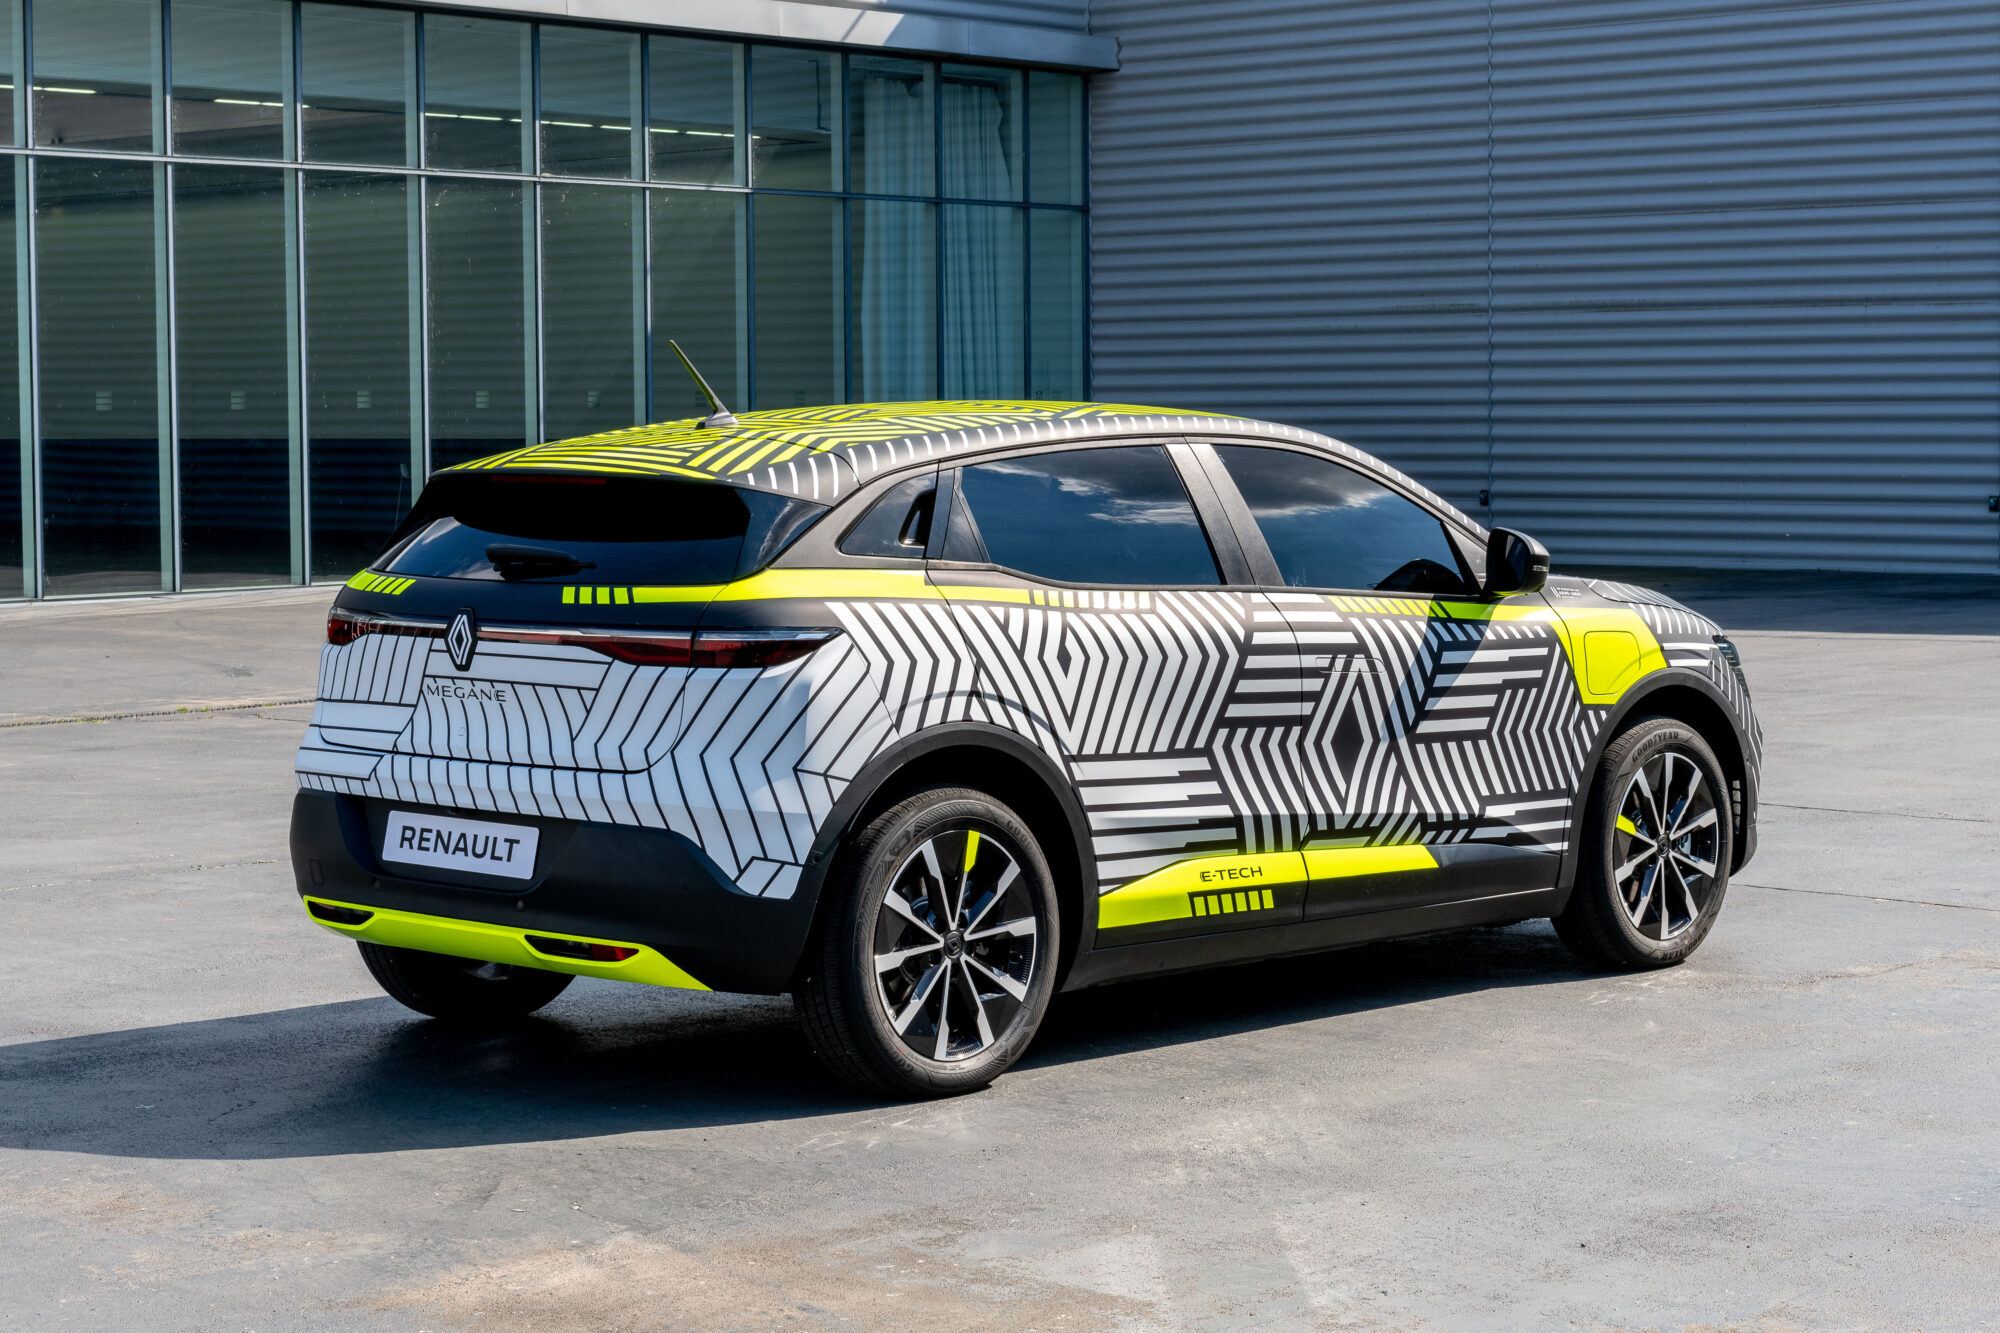 2021 - New Renault MEGANE E-TECH Electric pre-production.jpeg